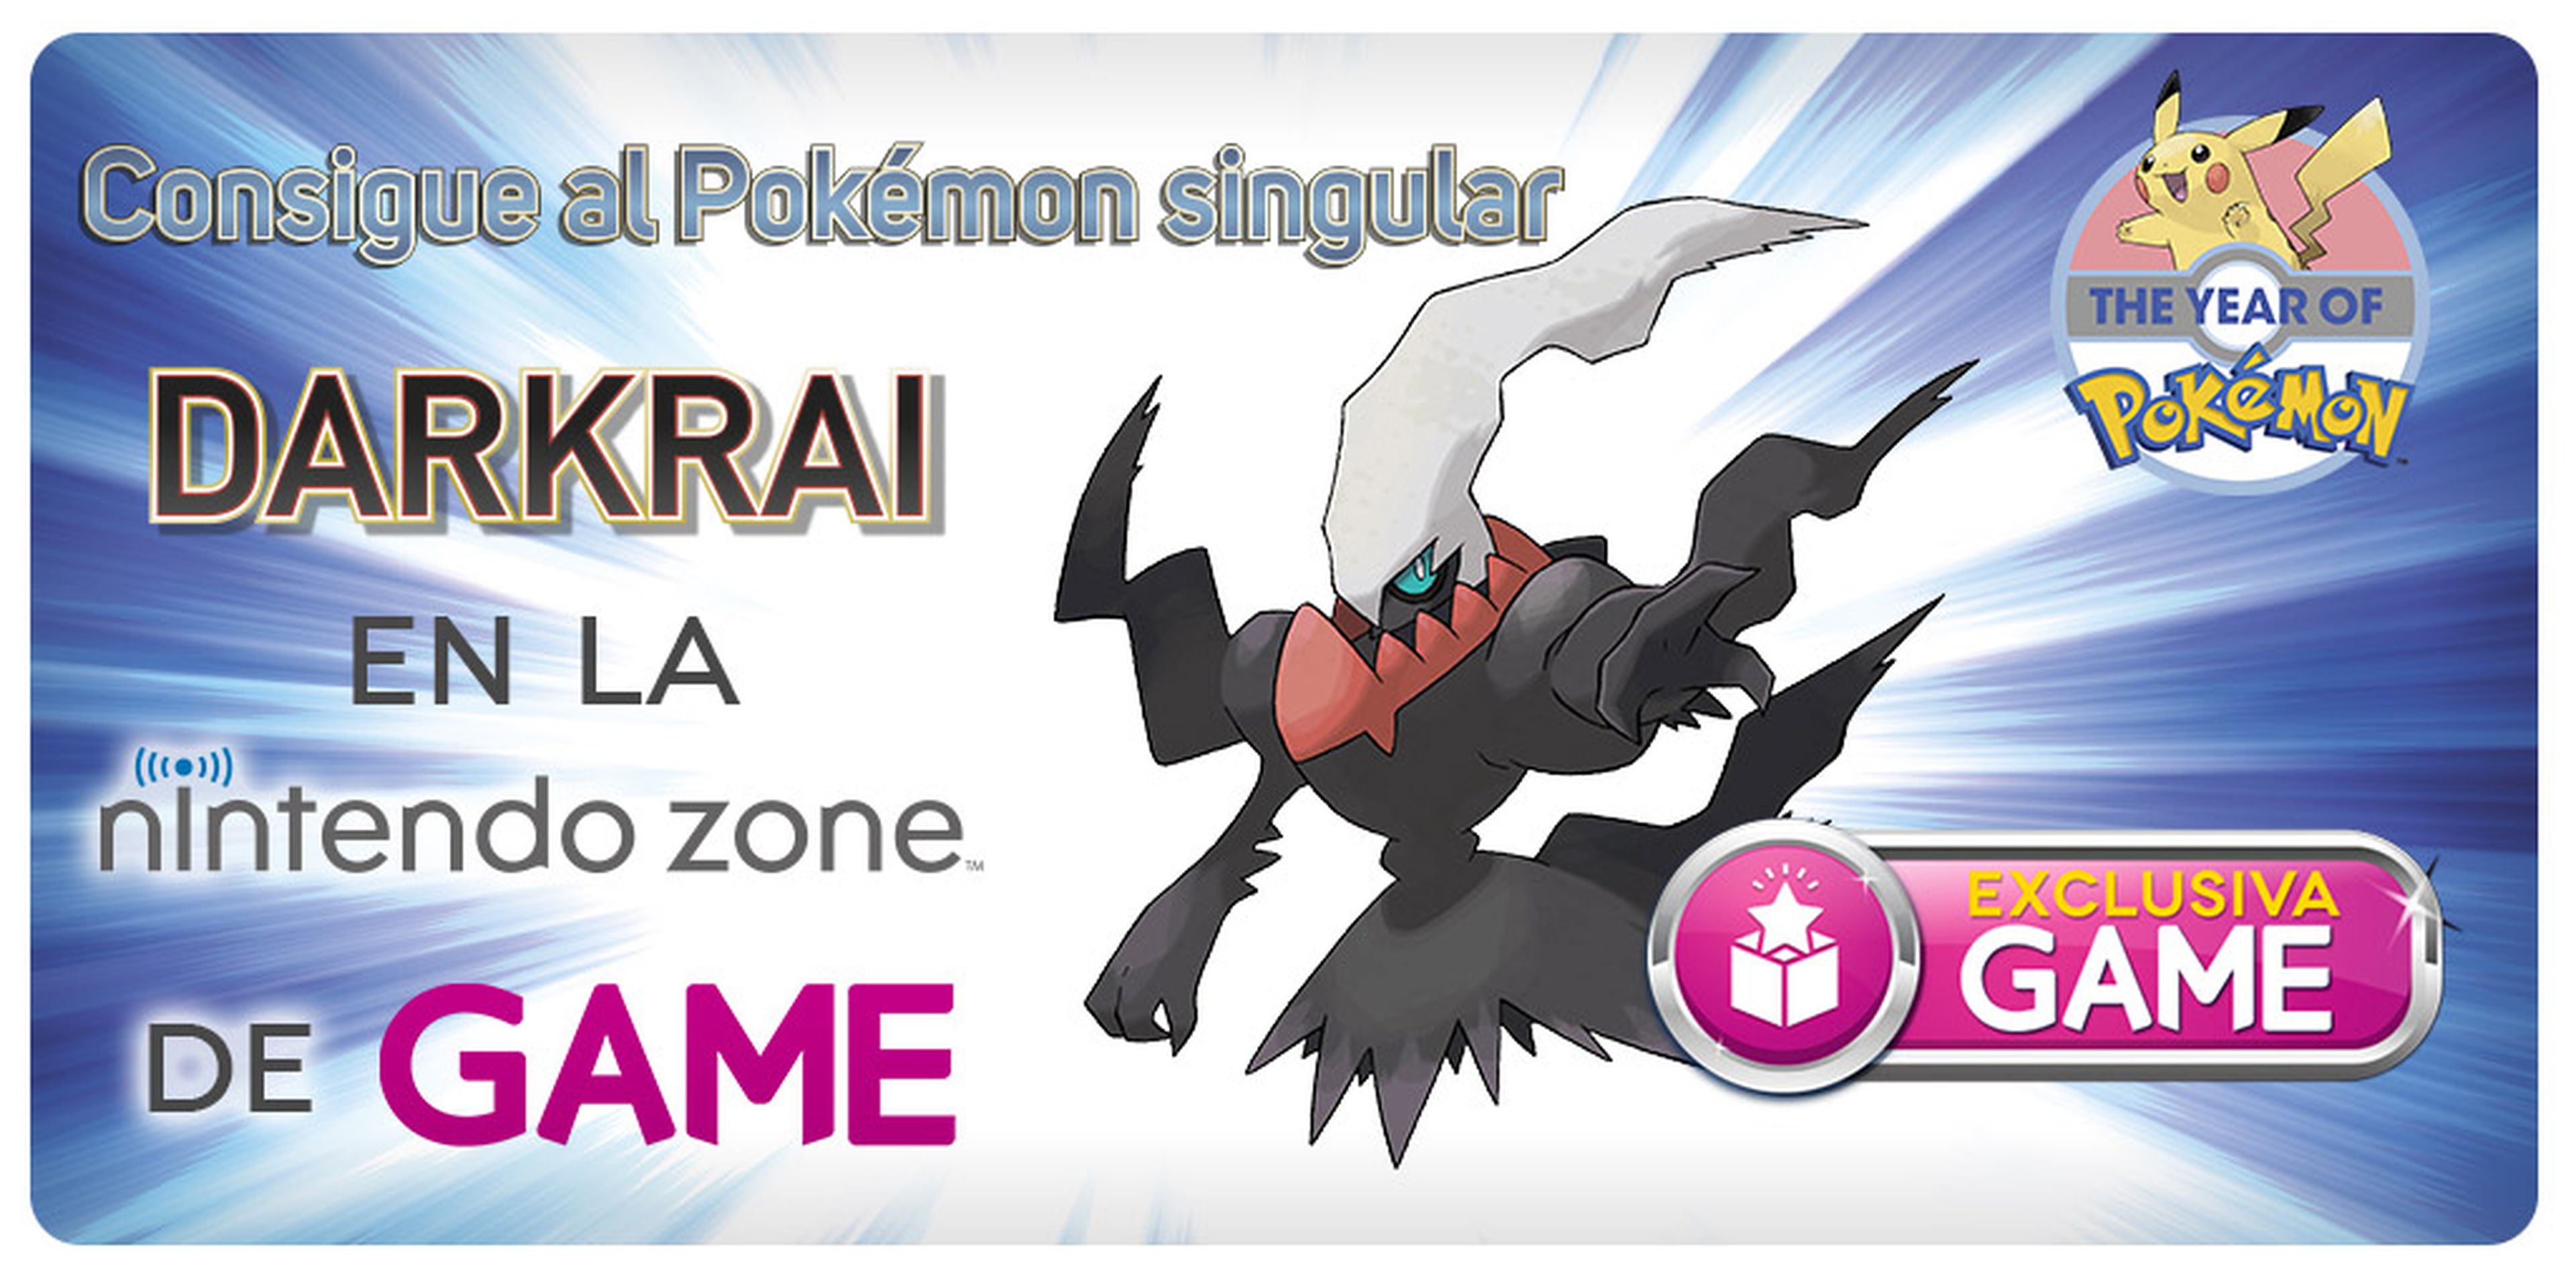 Pokémon 3DS - Consigue a Darkrai GRATIS en GAME